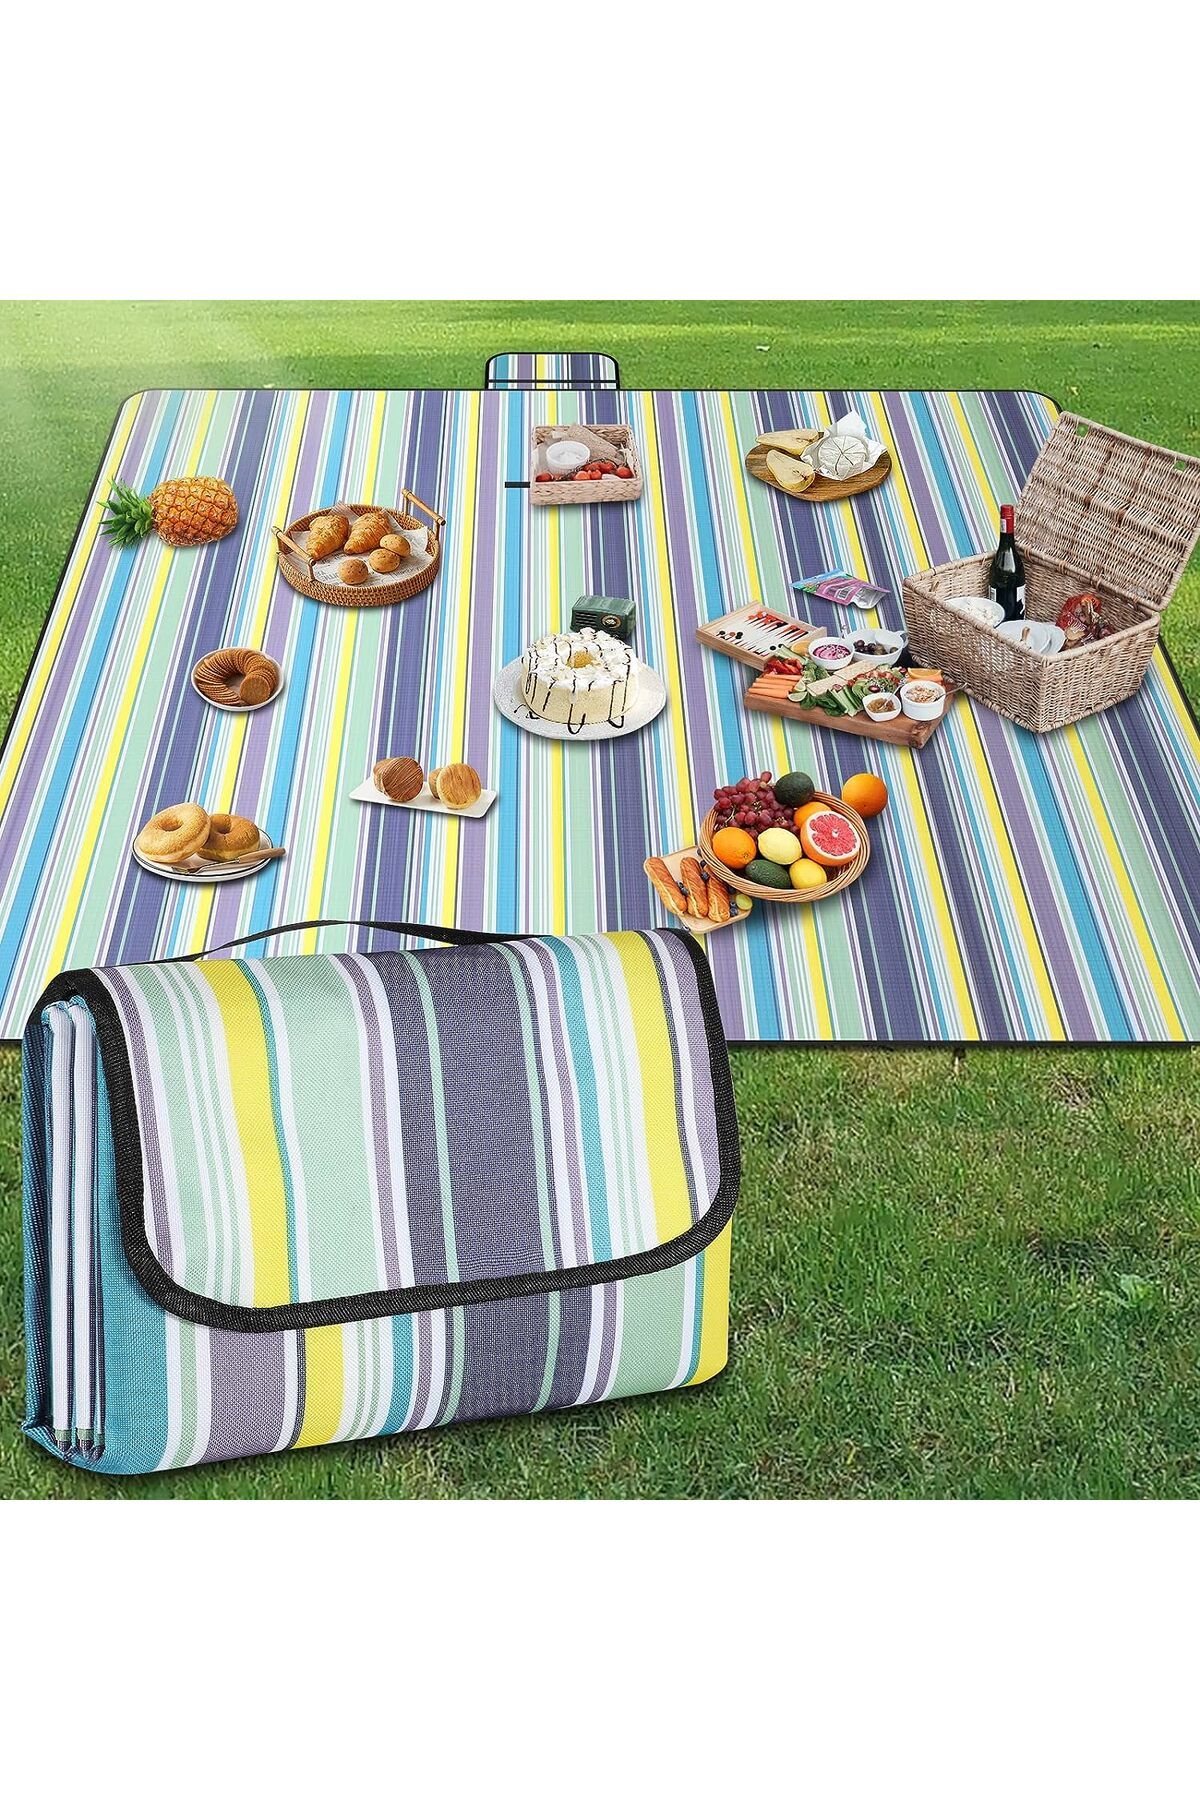 LUPPER plaj örtüsü piknik matı kamp matı piknik örtüsü 200*200 cm